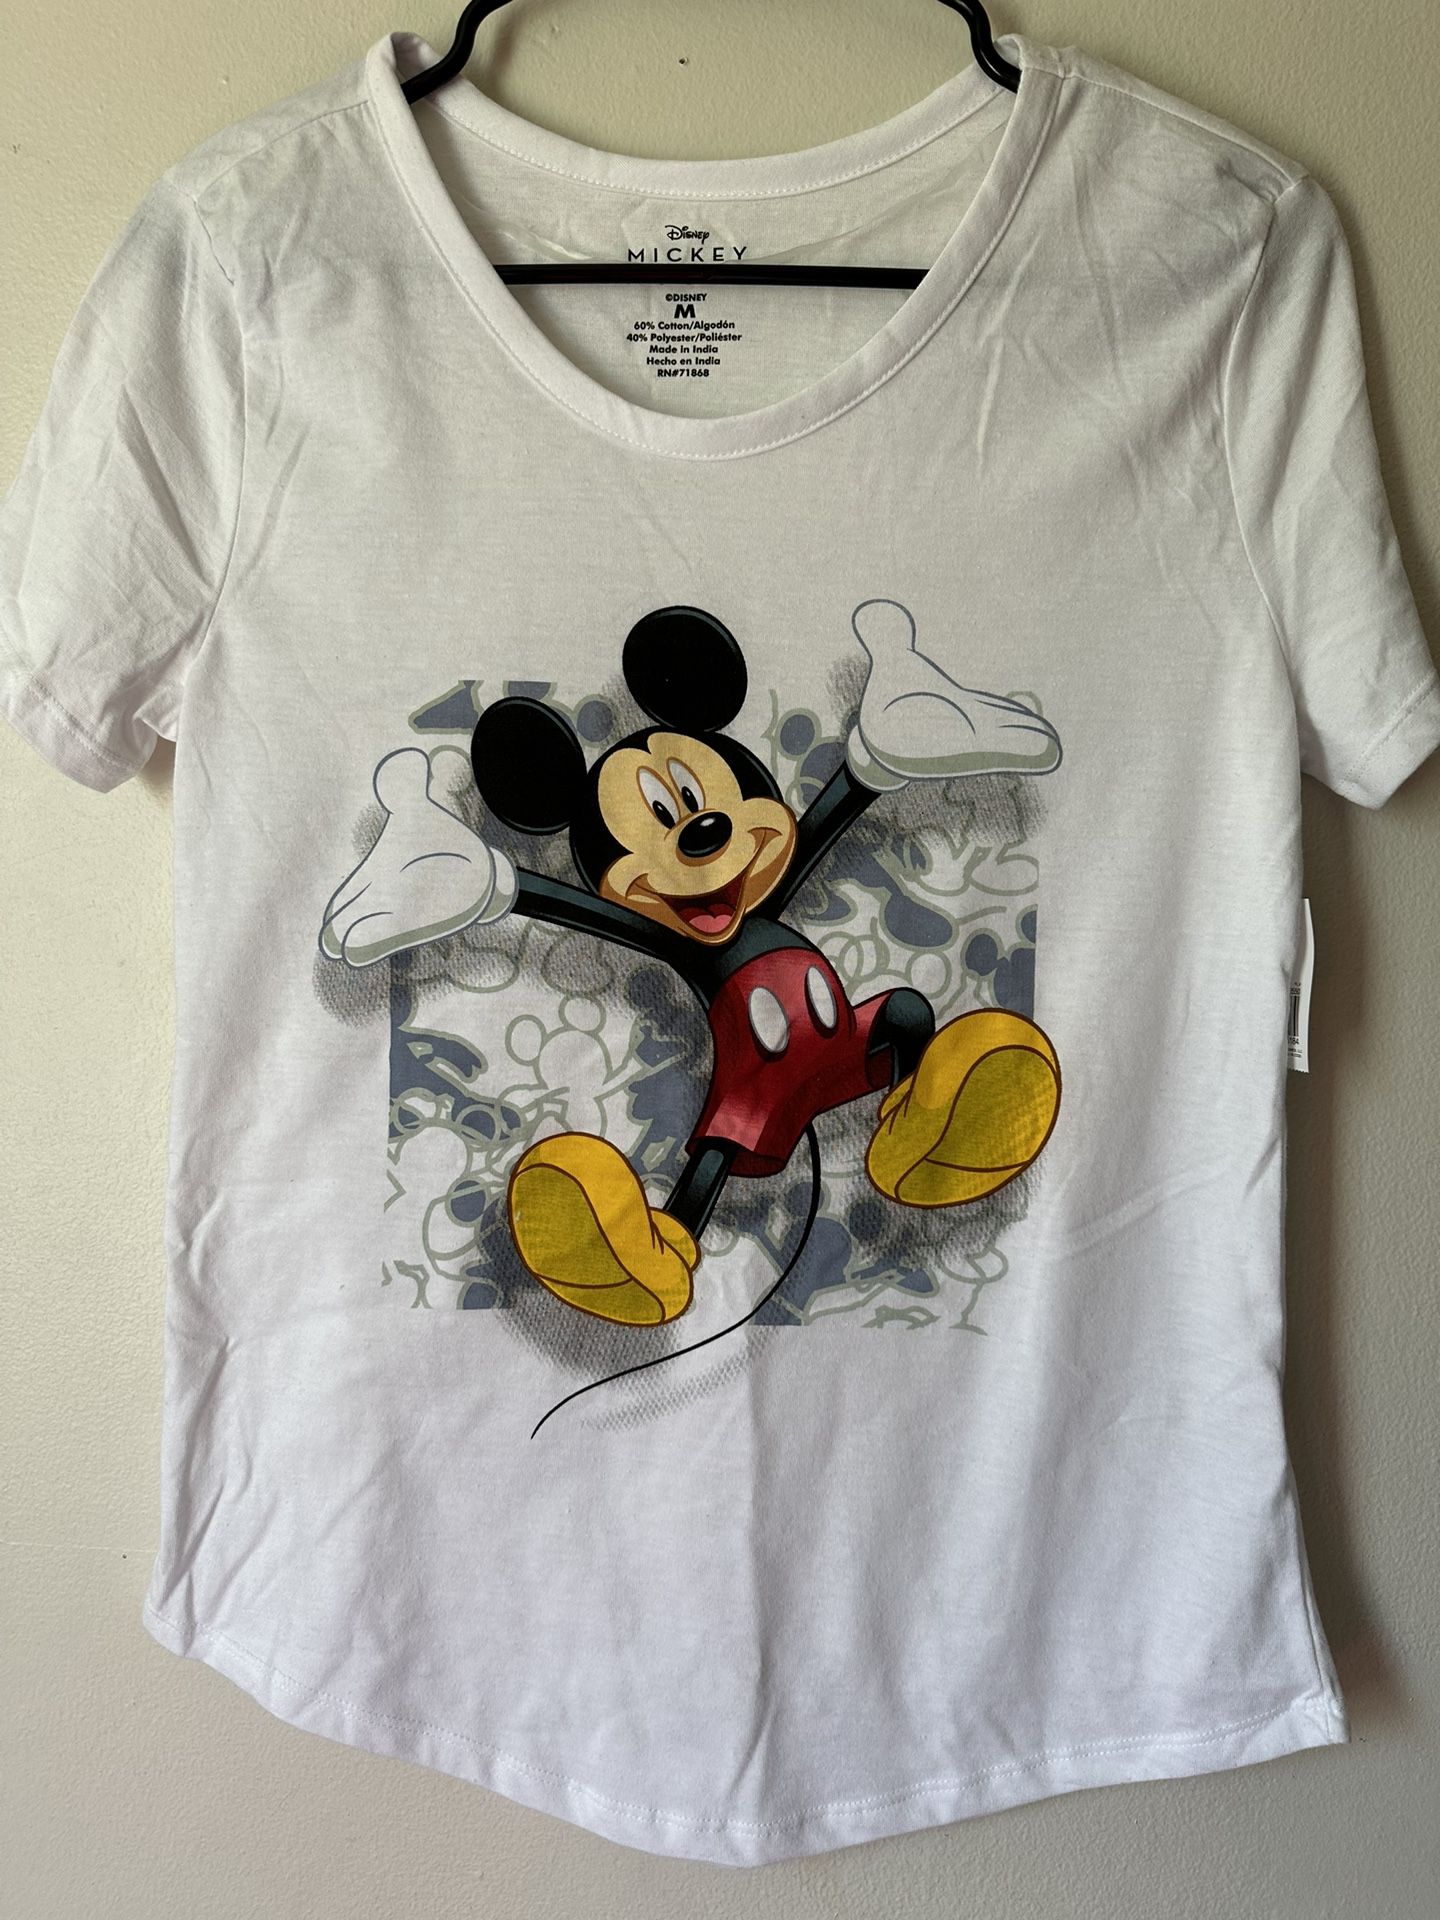 Mickey Mouse Disney Shirt Size Medium T shirt T-Shirt Tee Shirt Top Graphic Tee